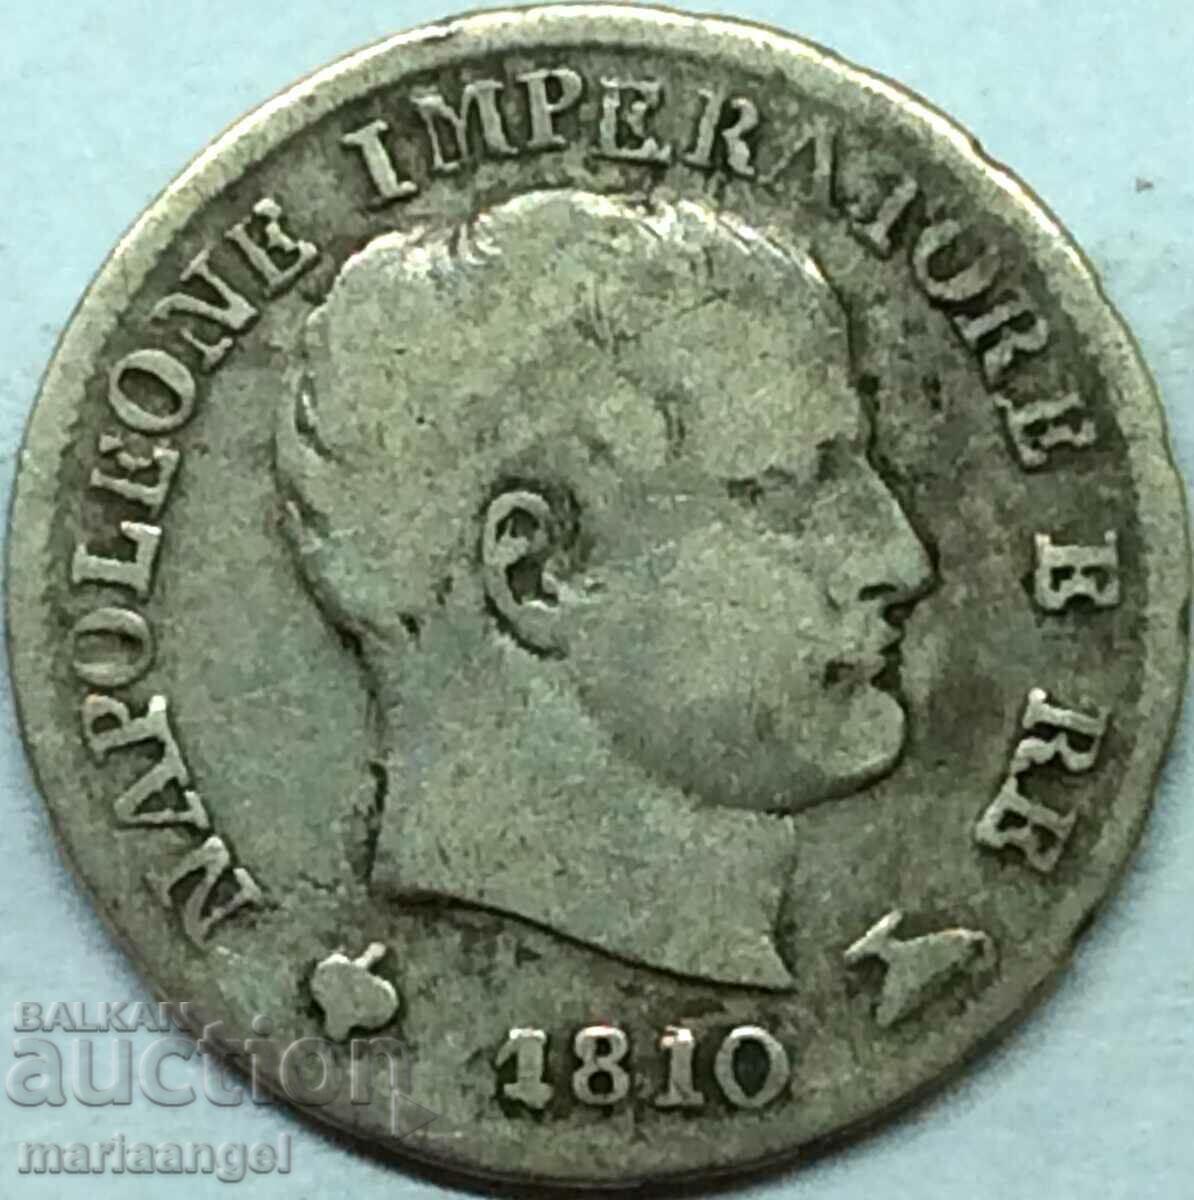 Napoleon 5 soldi 1810 M - Milan Italy silver - quite rare